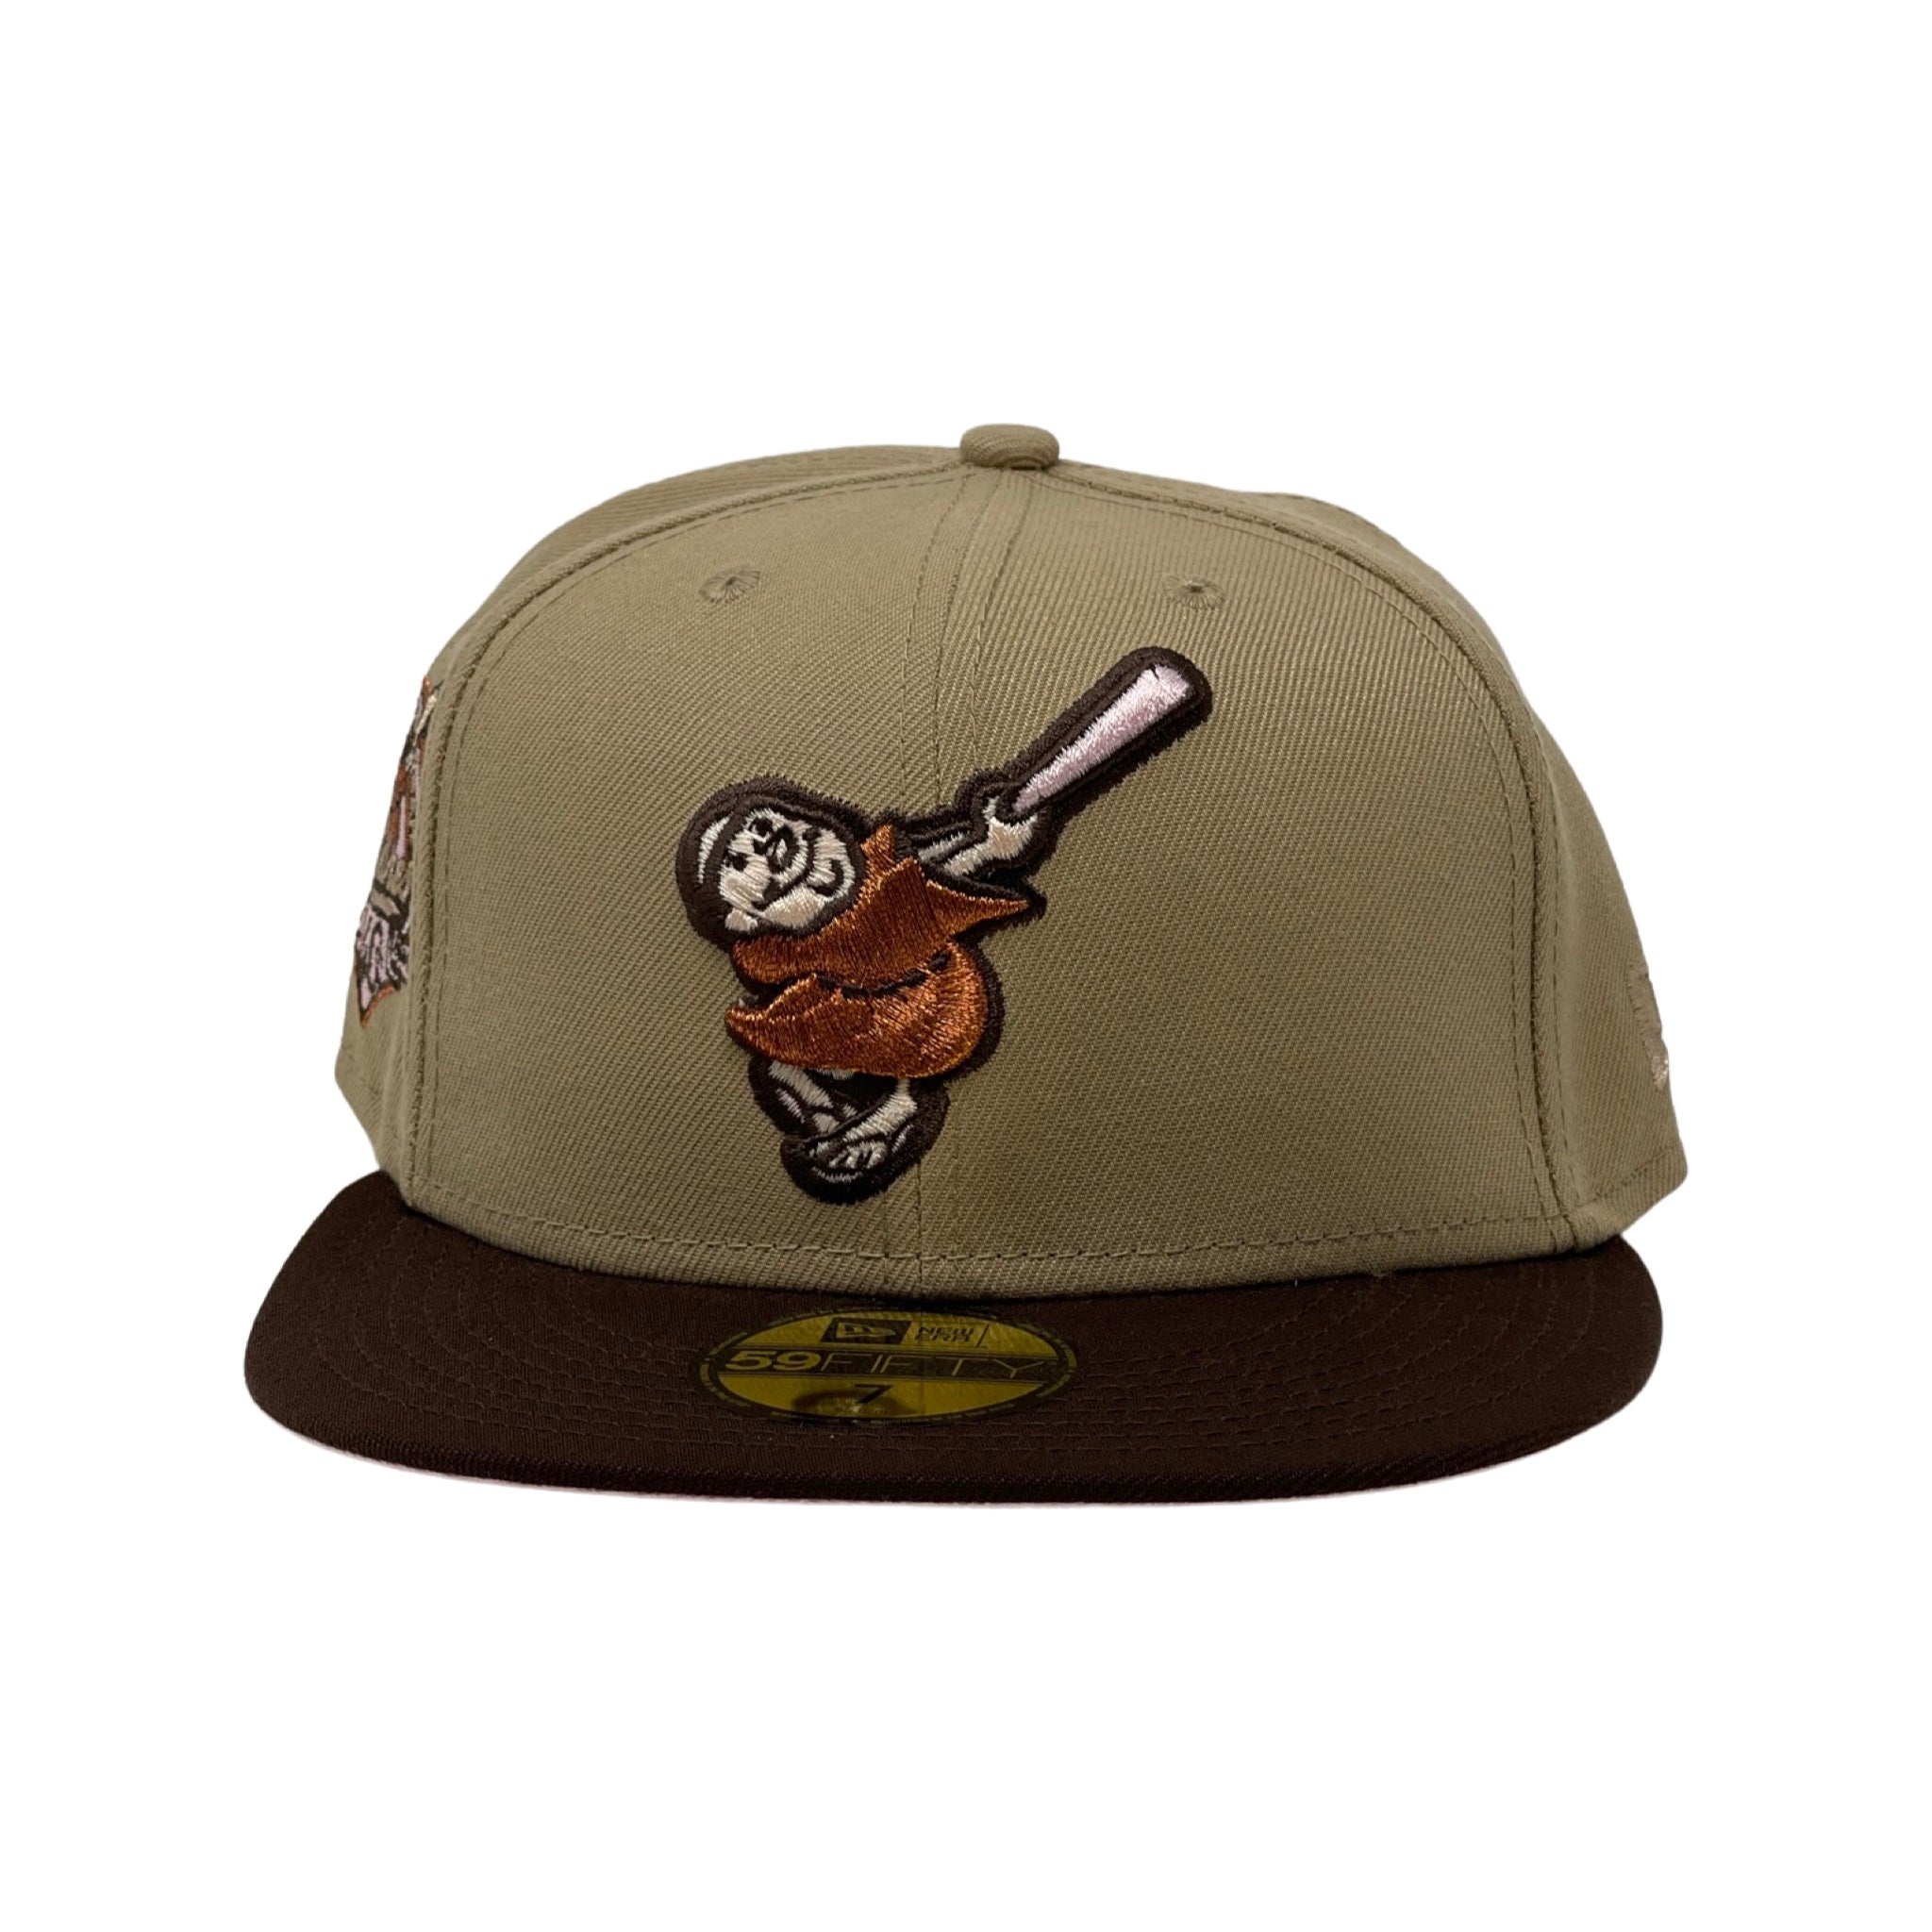 New Era Hat - San Diego Padres - Khaki / Brown